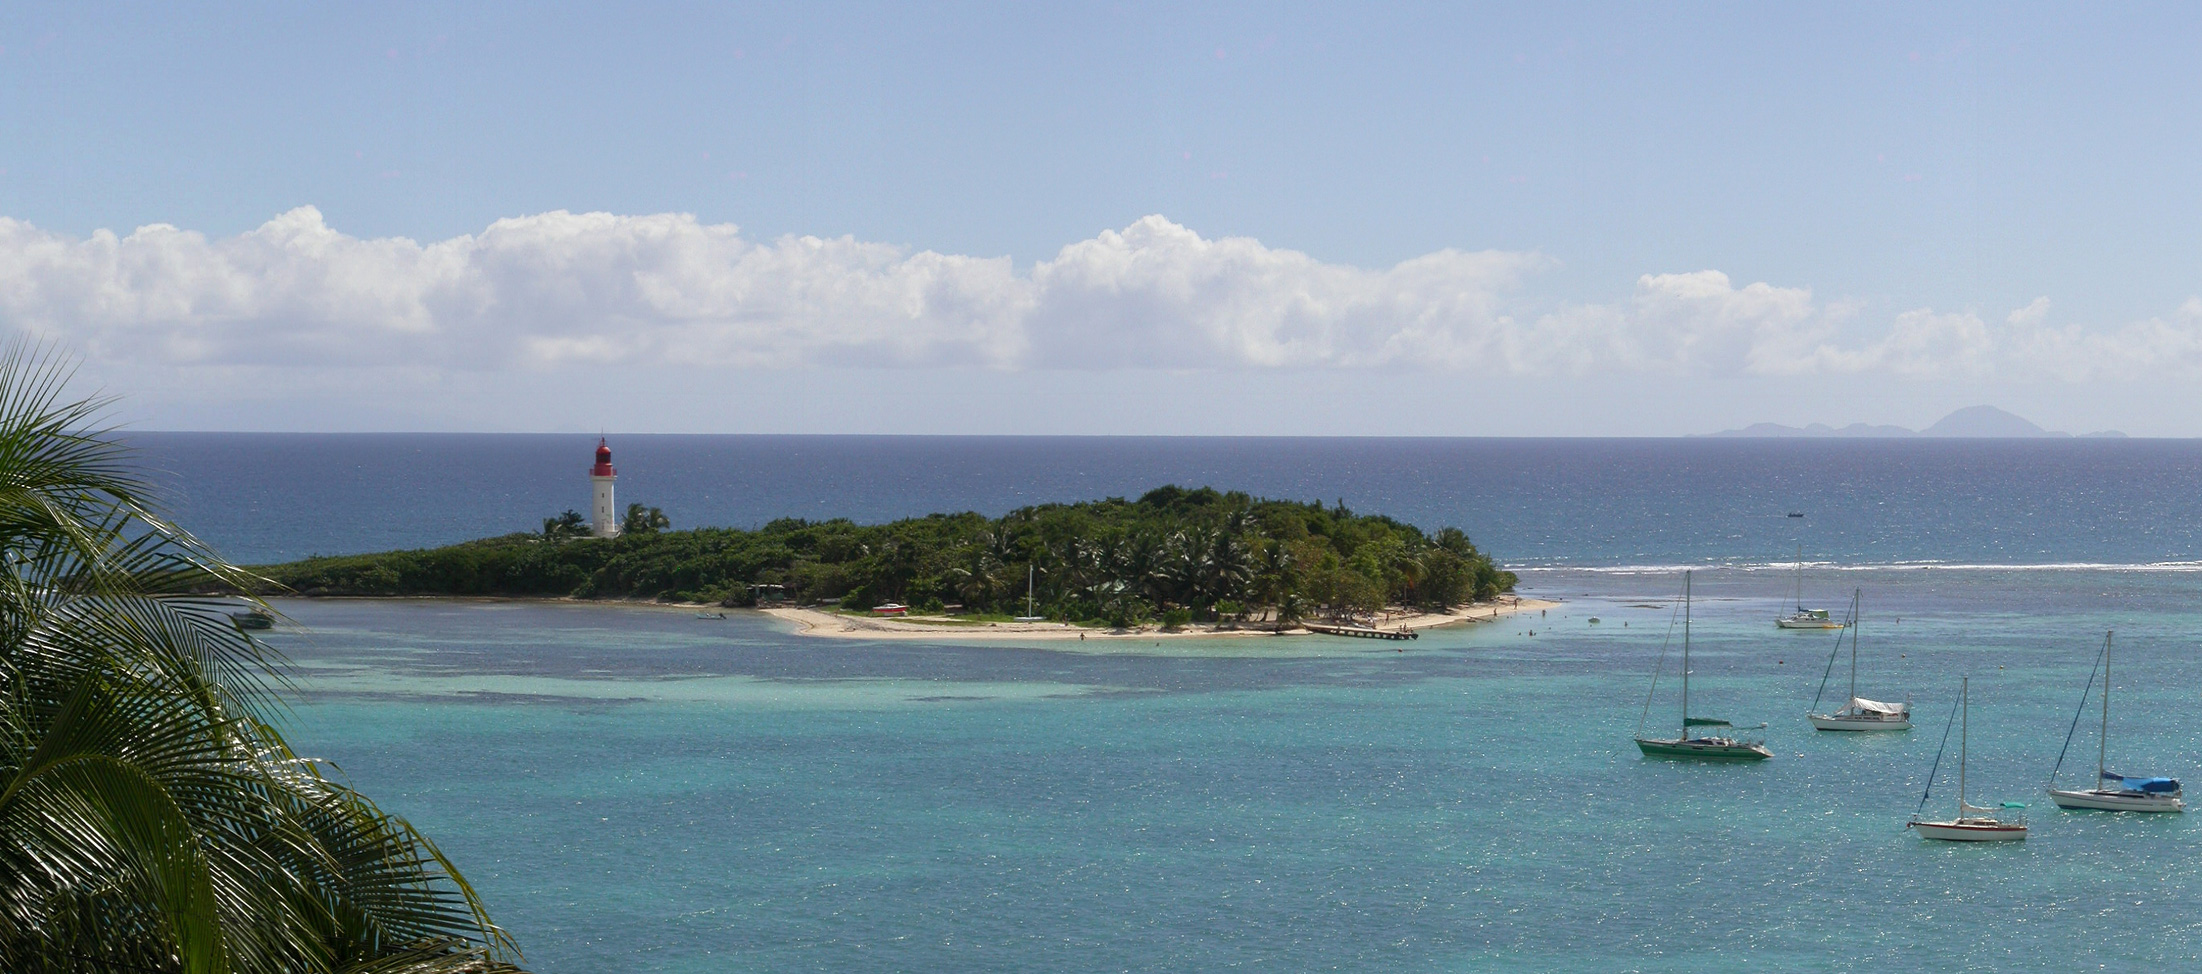 Résidence Turquoise Guadeloupe vue mer sea view et vue lagon laggon view